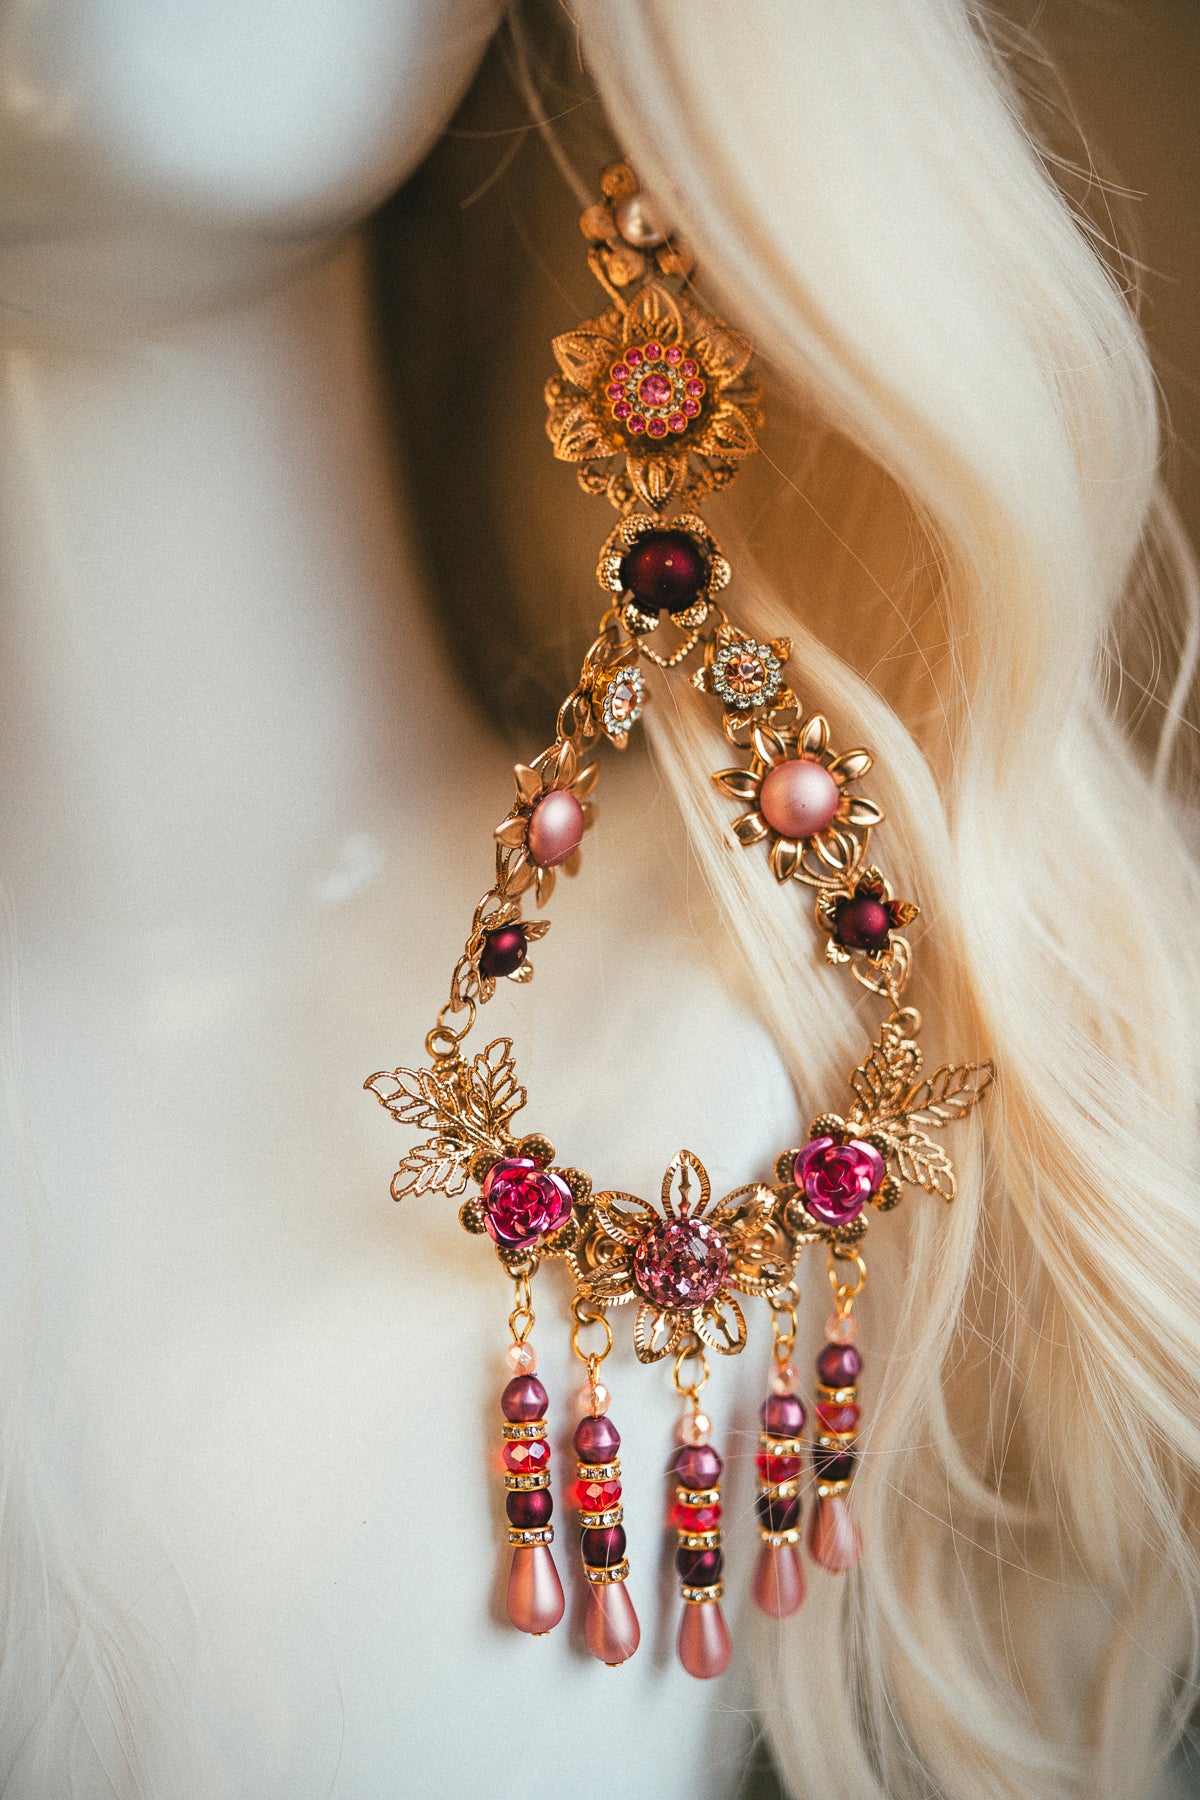 Load image into Gallery viewer, Pink Flower Earrings
